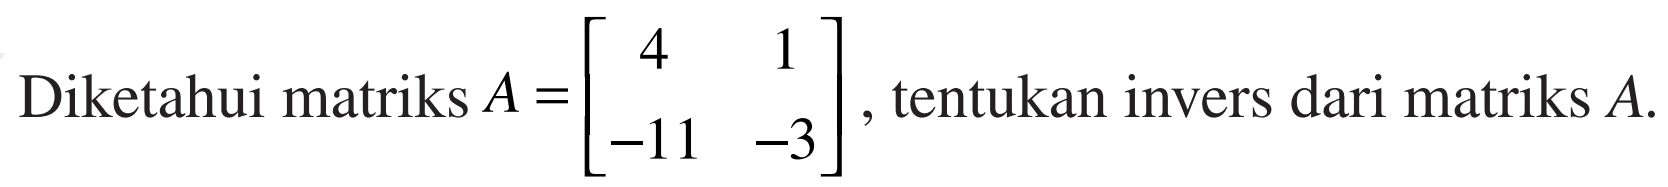 Diketahui matriks A=[4 1 -11 -3] , tentukan invers dari matriks A.